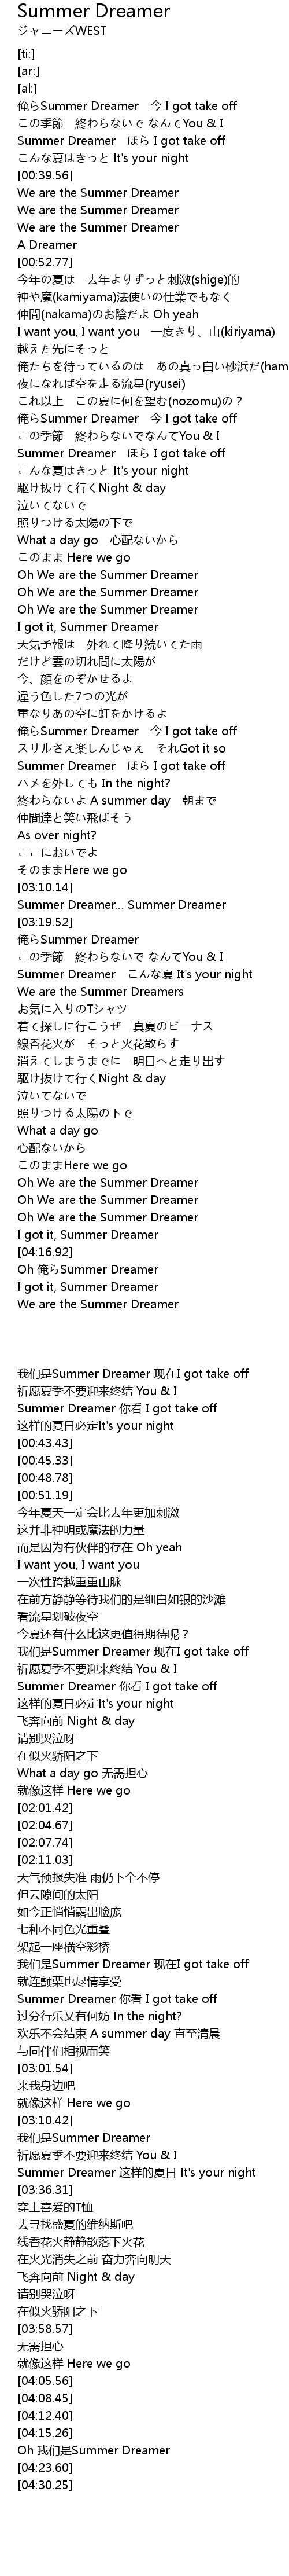 Summer Dreamer Lyrics Follow Lyrics